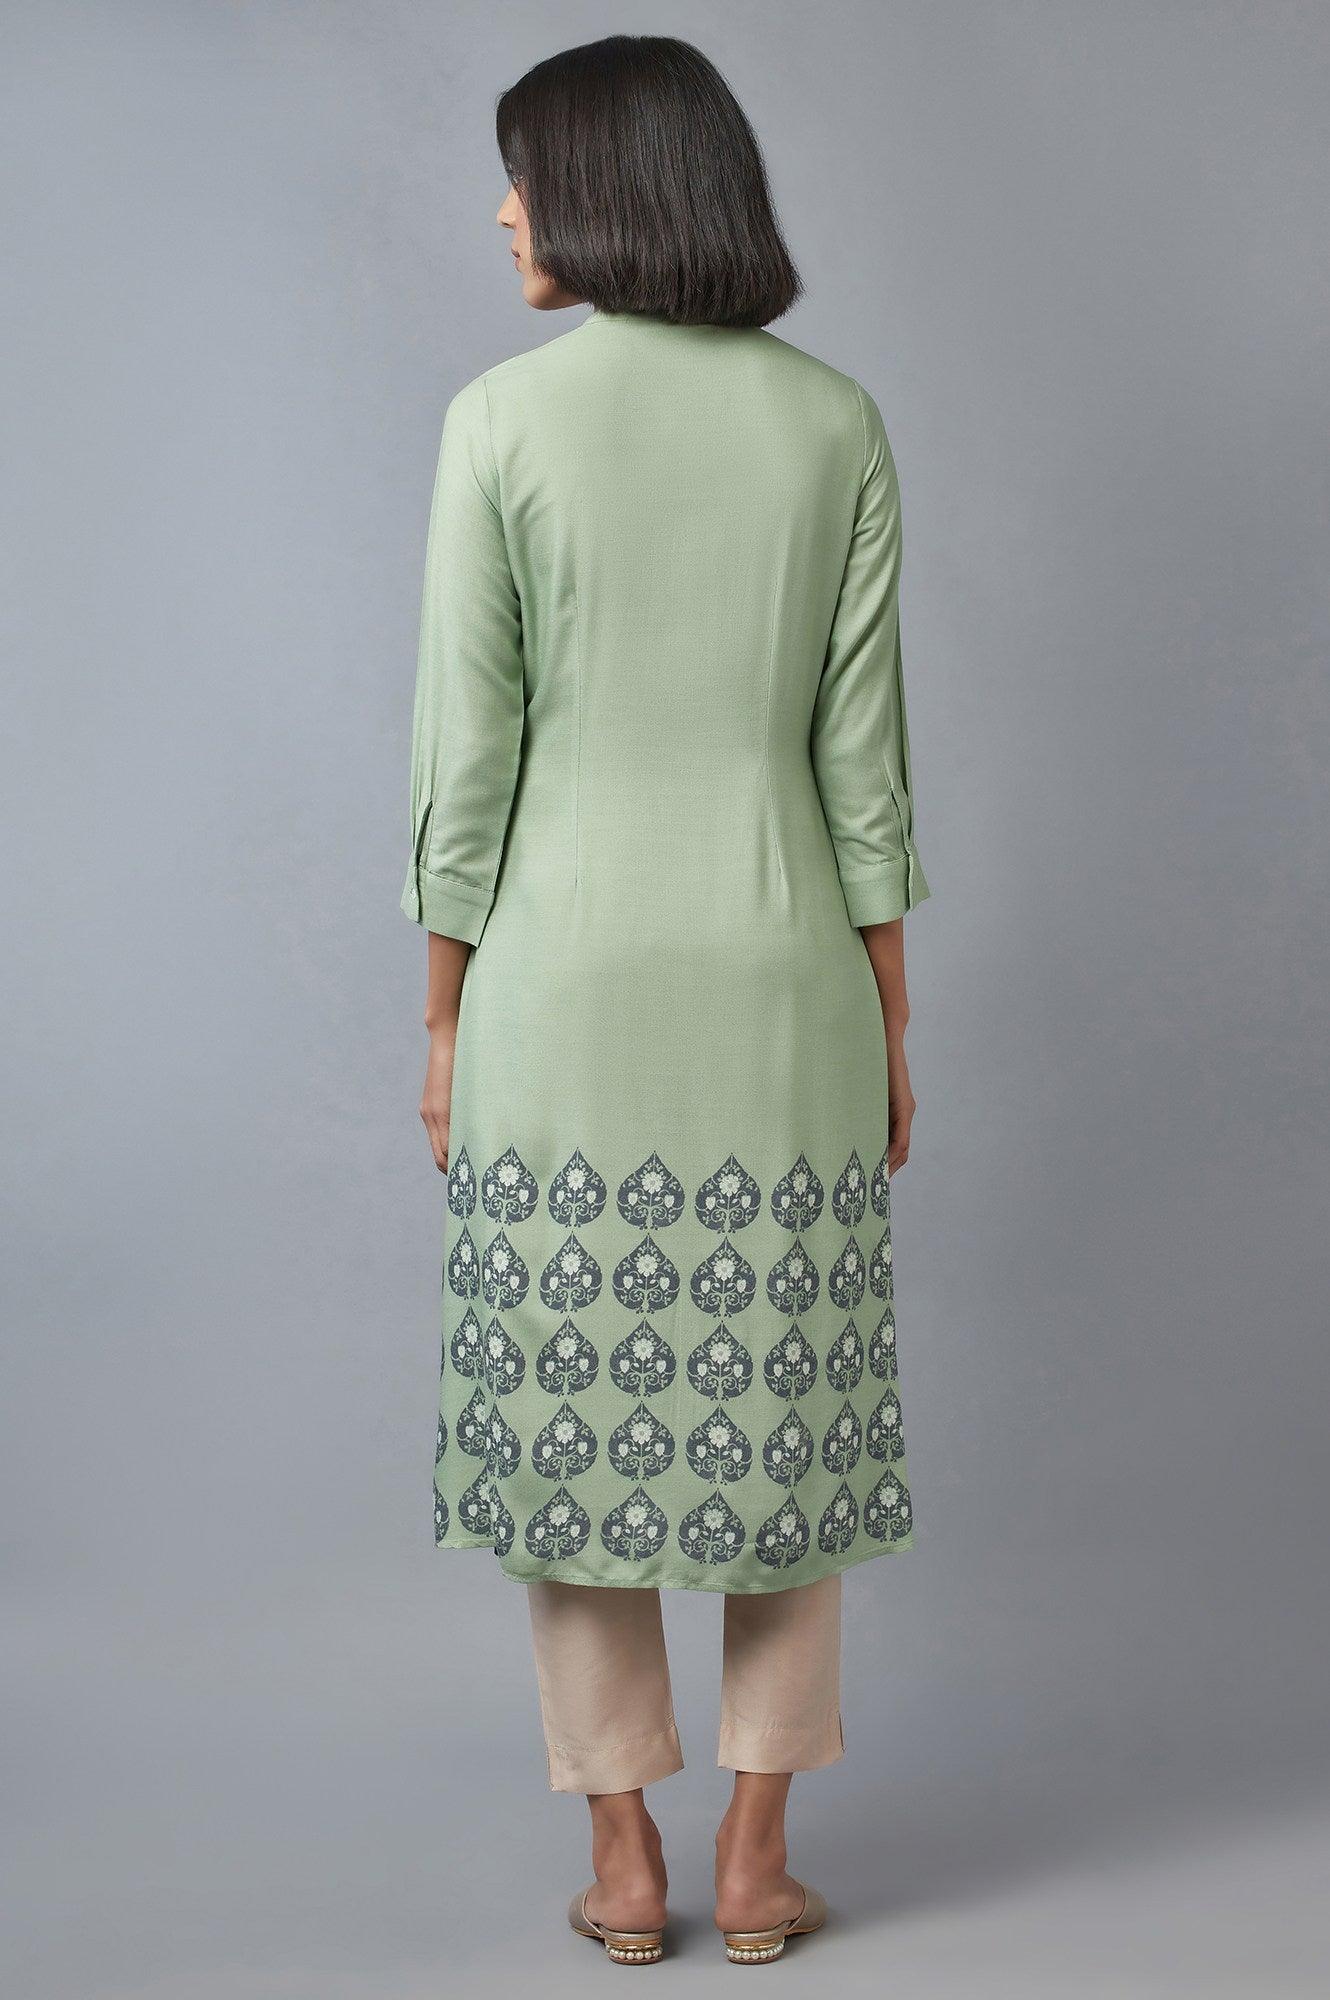 Fern Green A-line Printed kurta - wforwoman